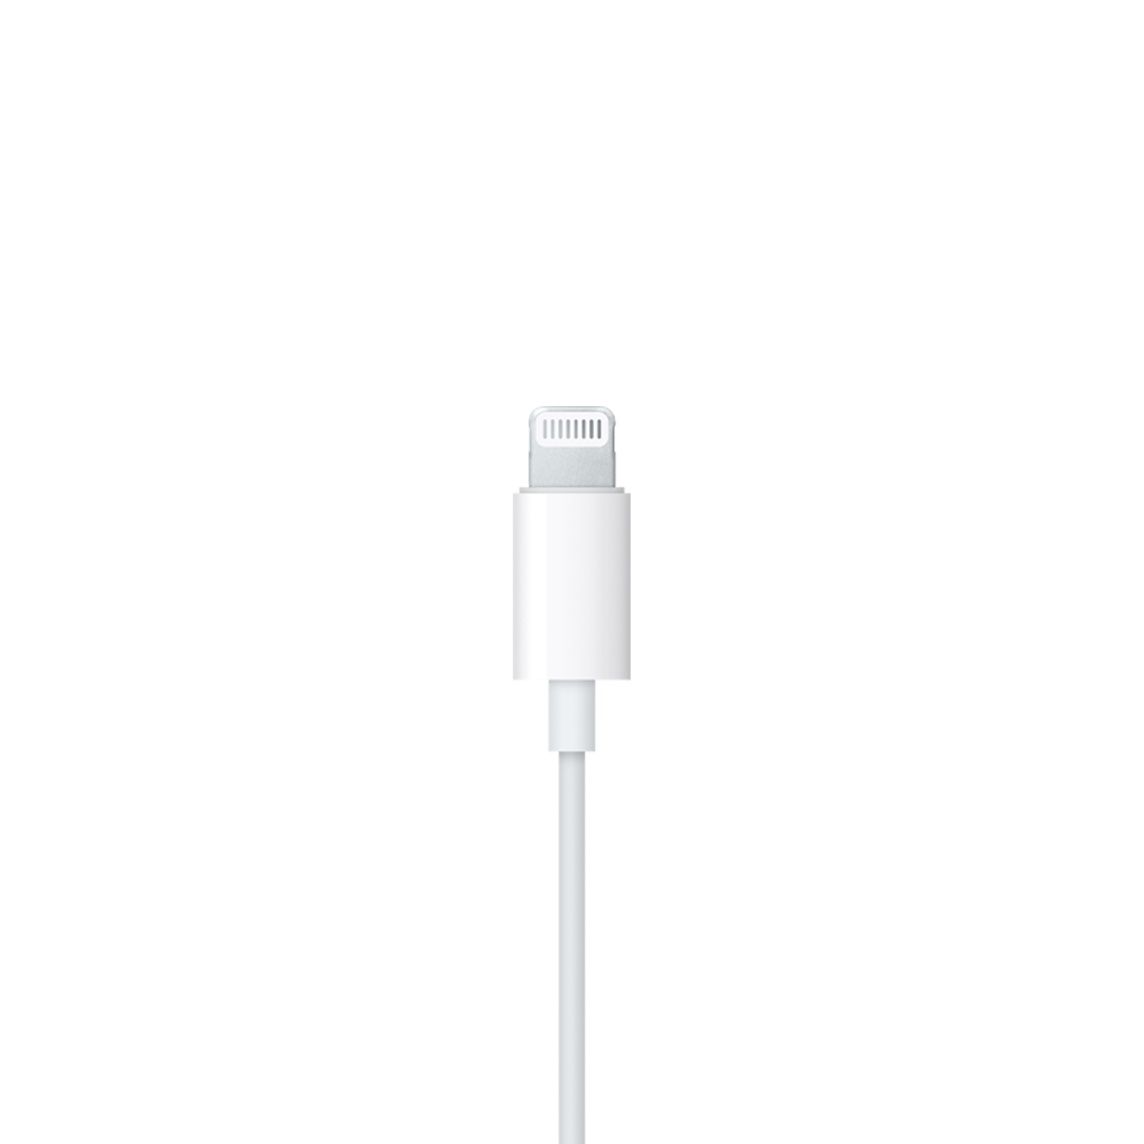 Apple EarPods with Lightning Connector - chính hãng, nobox